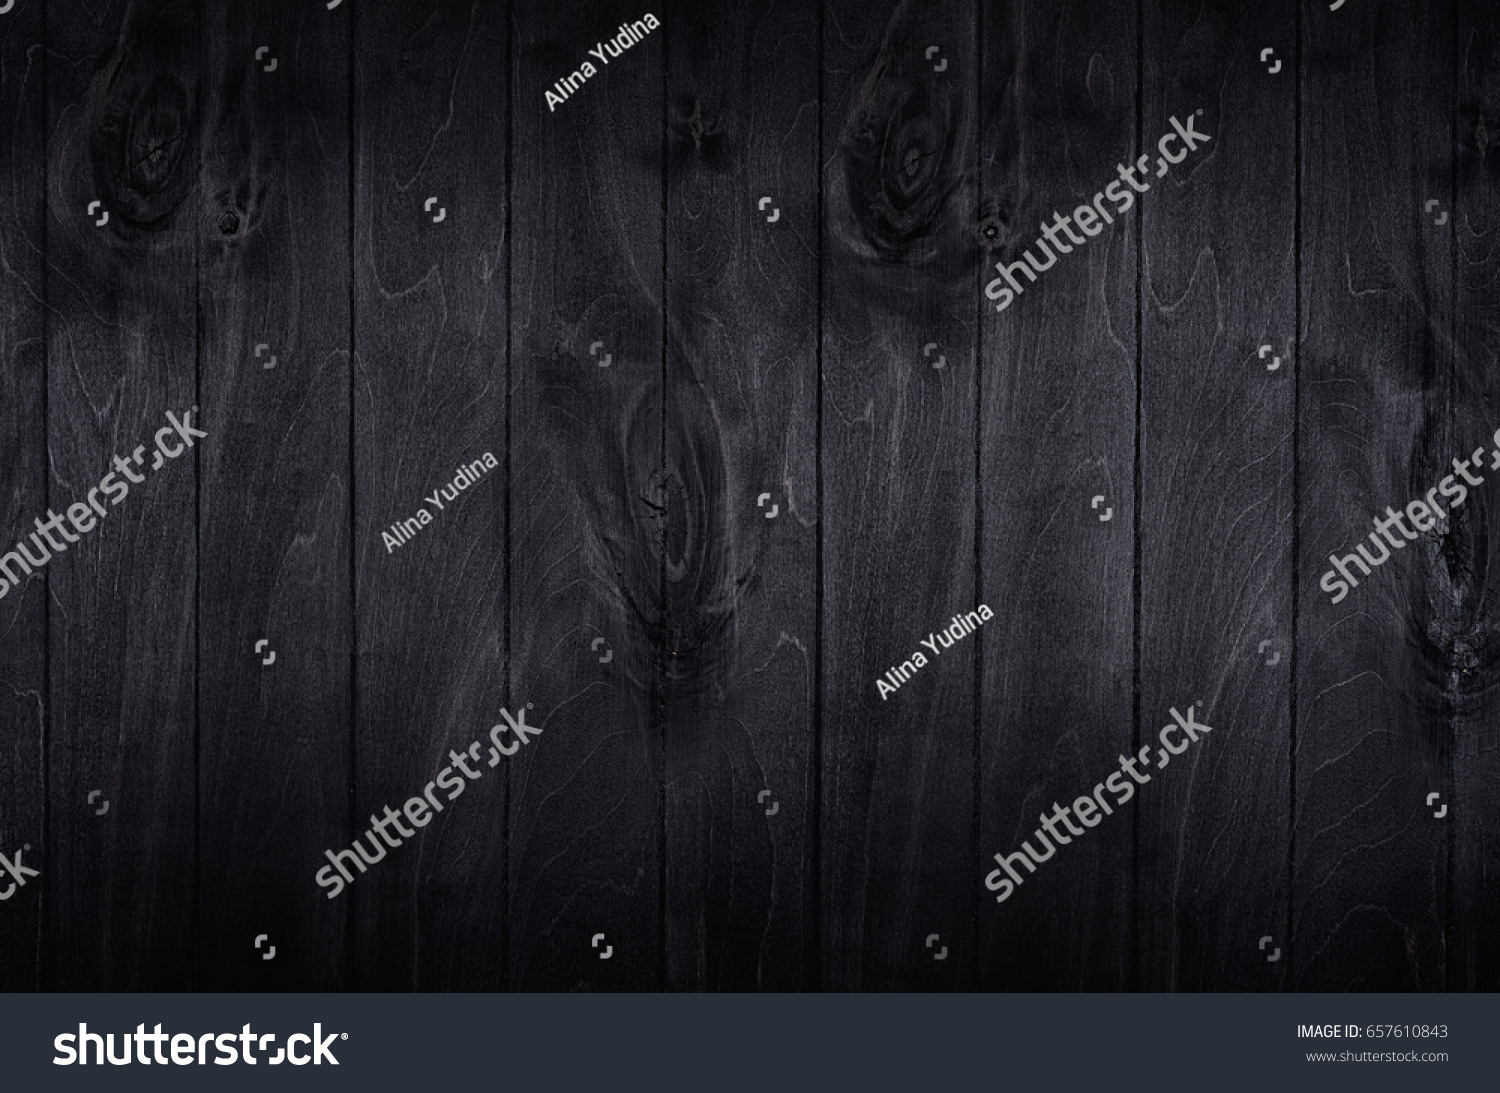 Noir elegance black wooden board background. Wood texture. #657610843